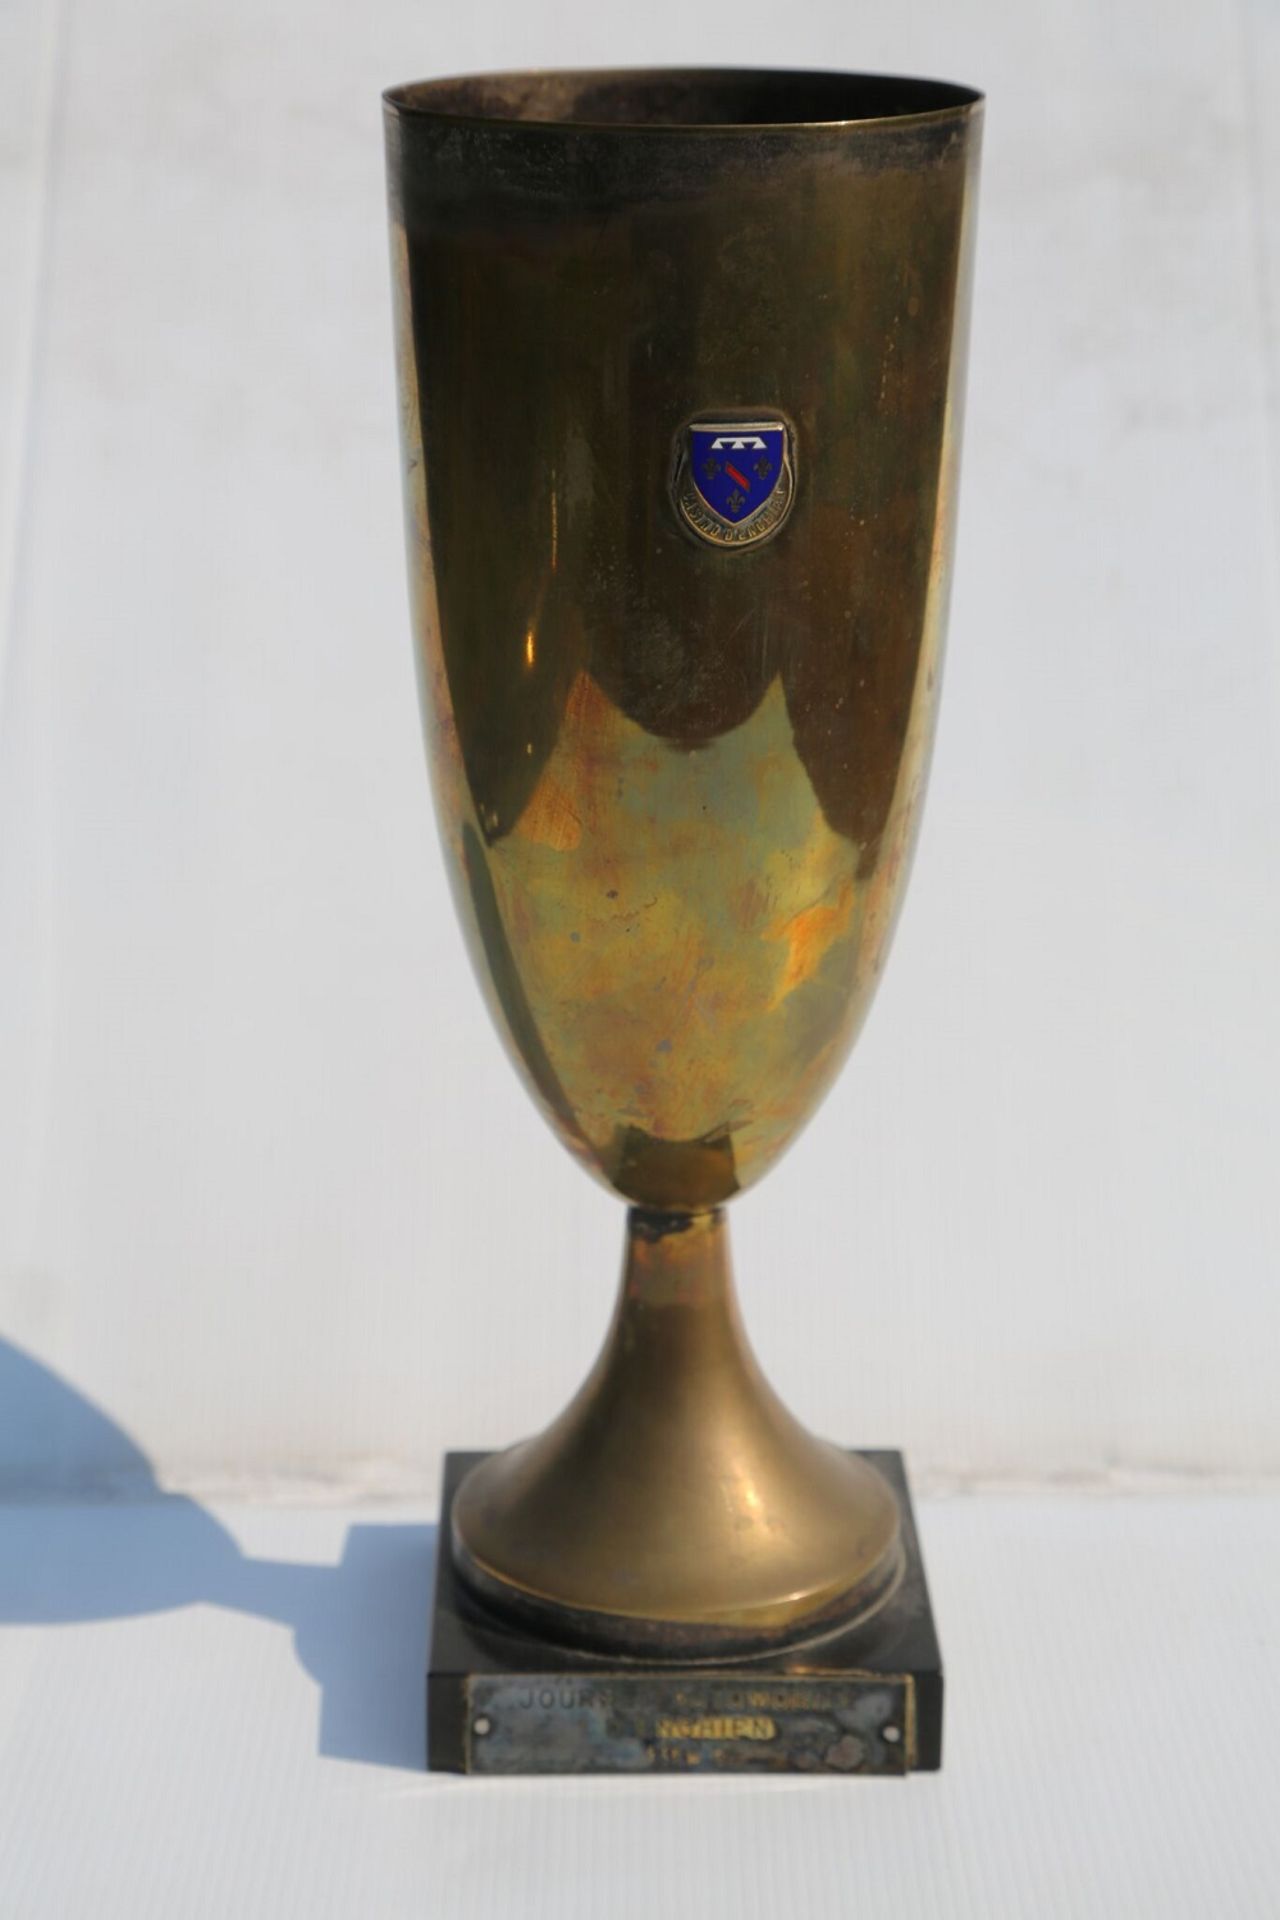 Liege-Rome-Liege 1954: Fine trophy on a marble base